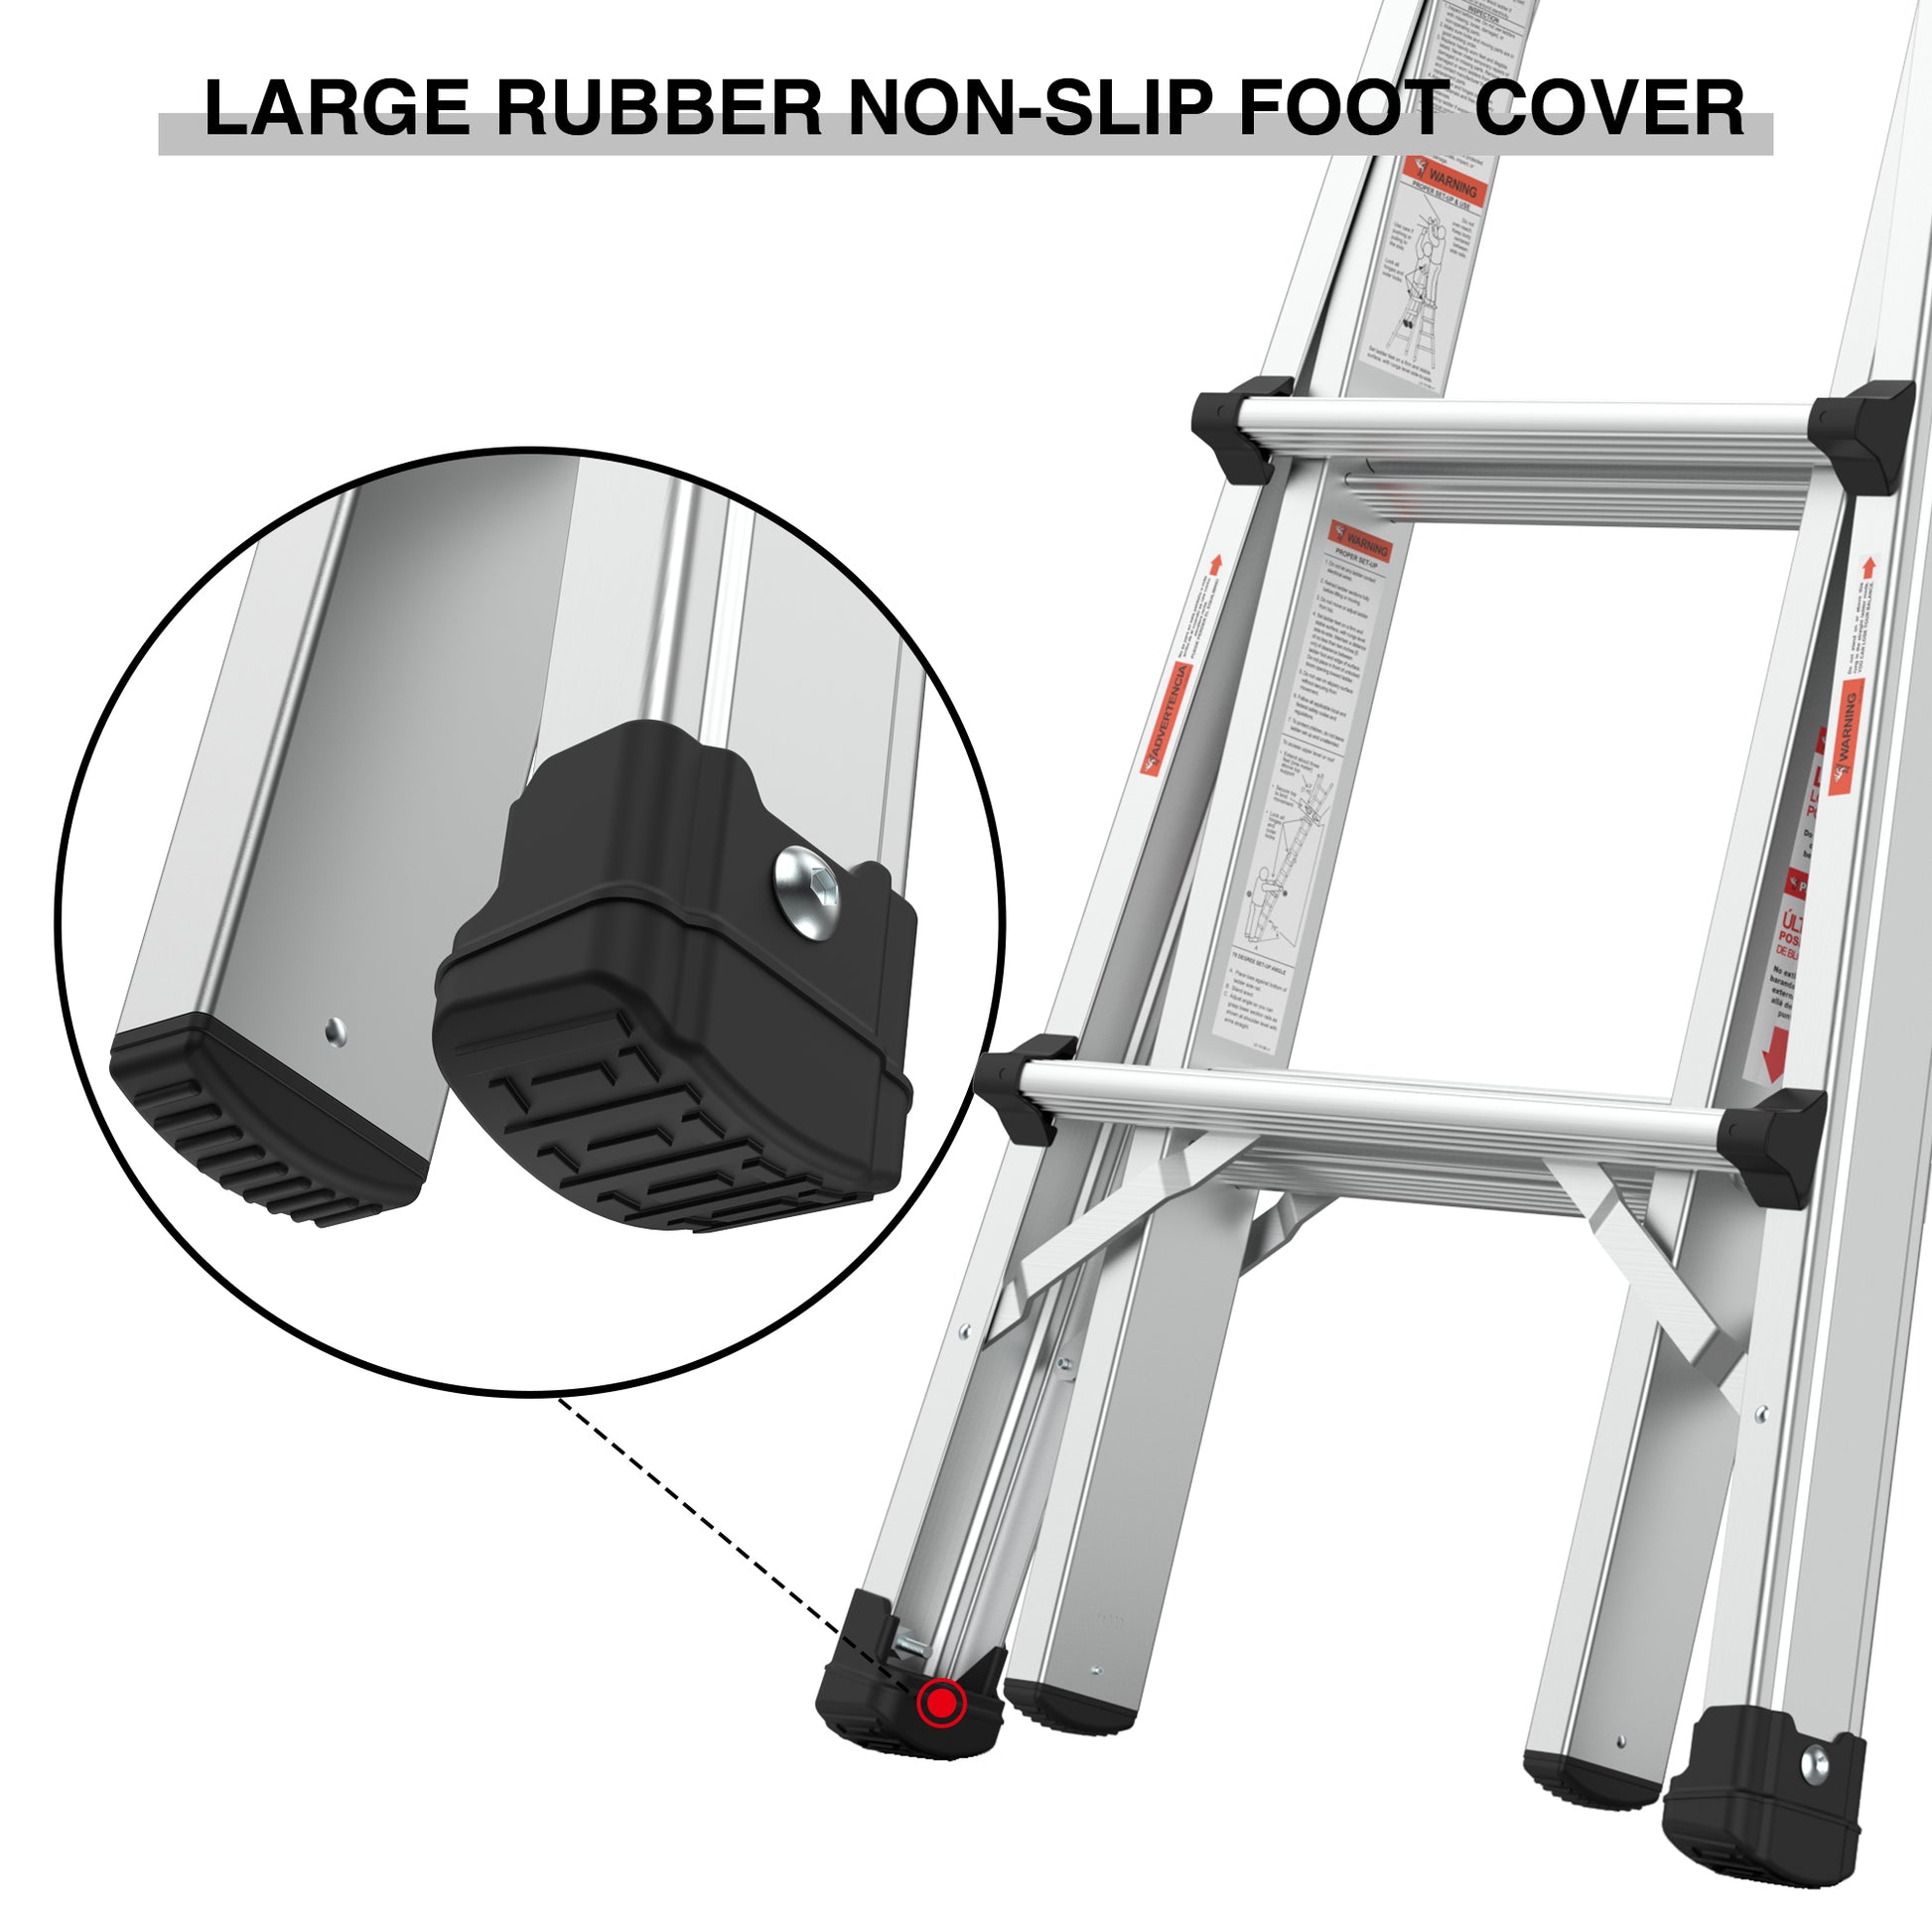 Aluminum Multi Position Ladder with Wheels, 300 lbs metallic grey-aluminium alloy